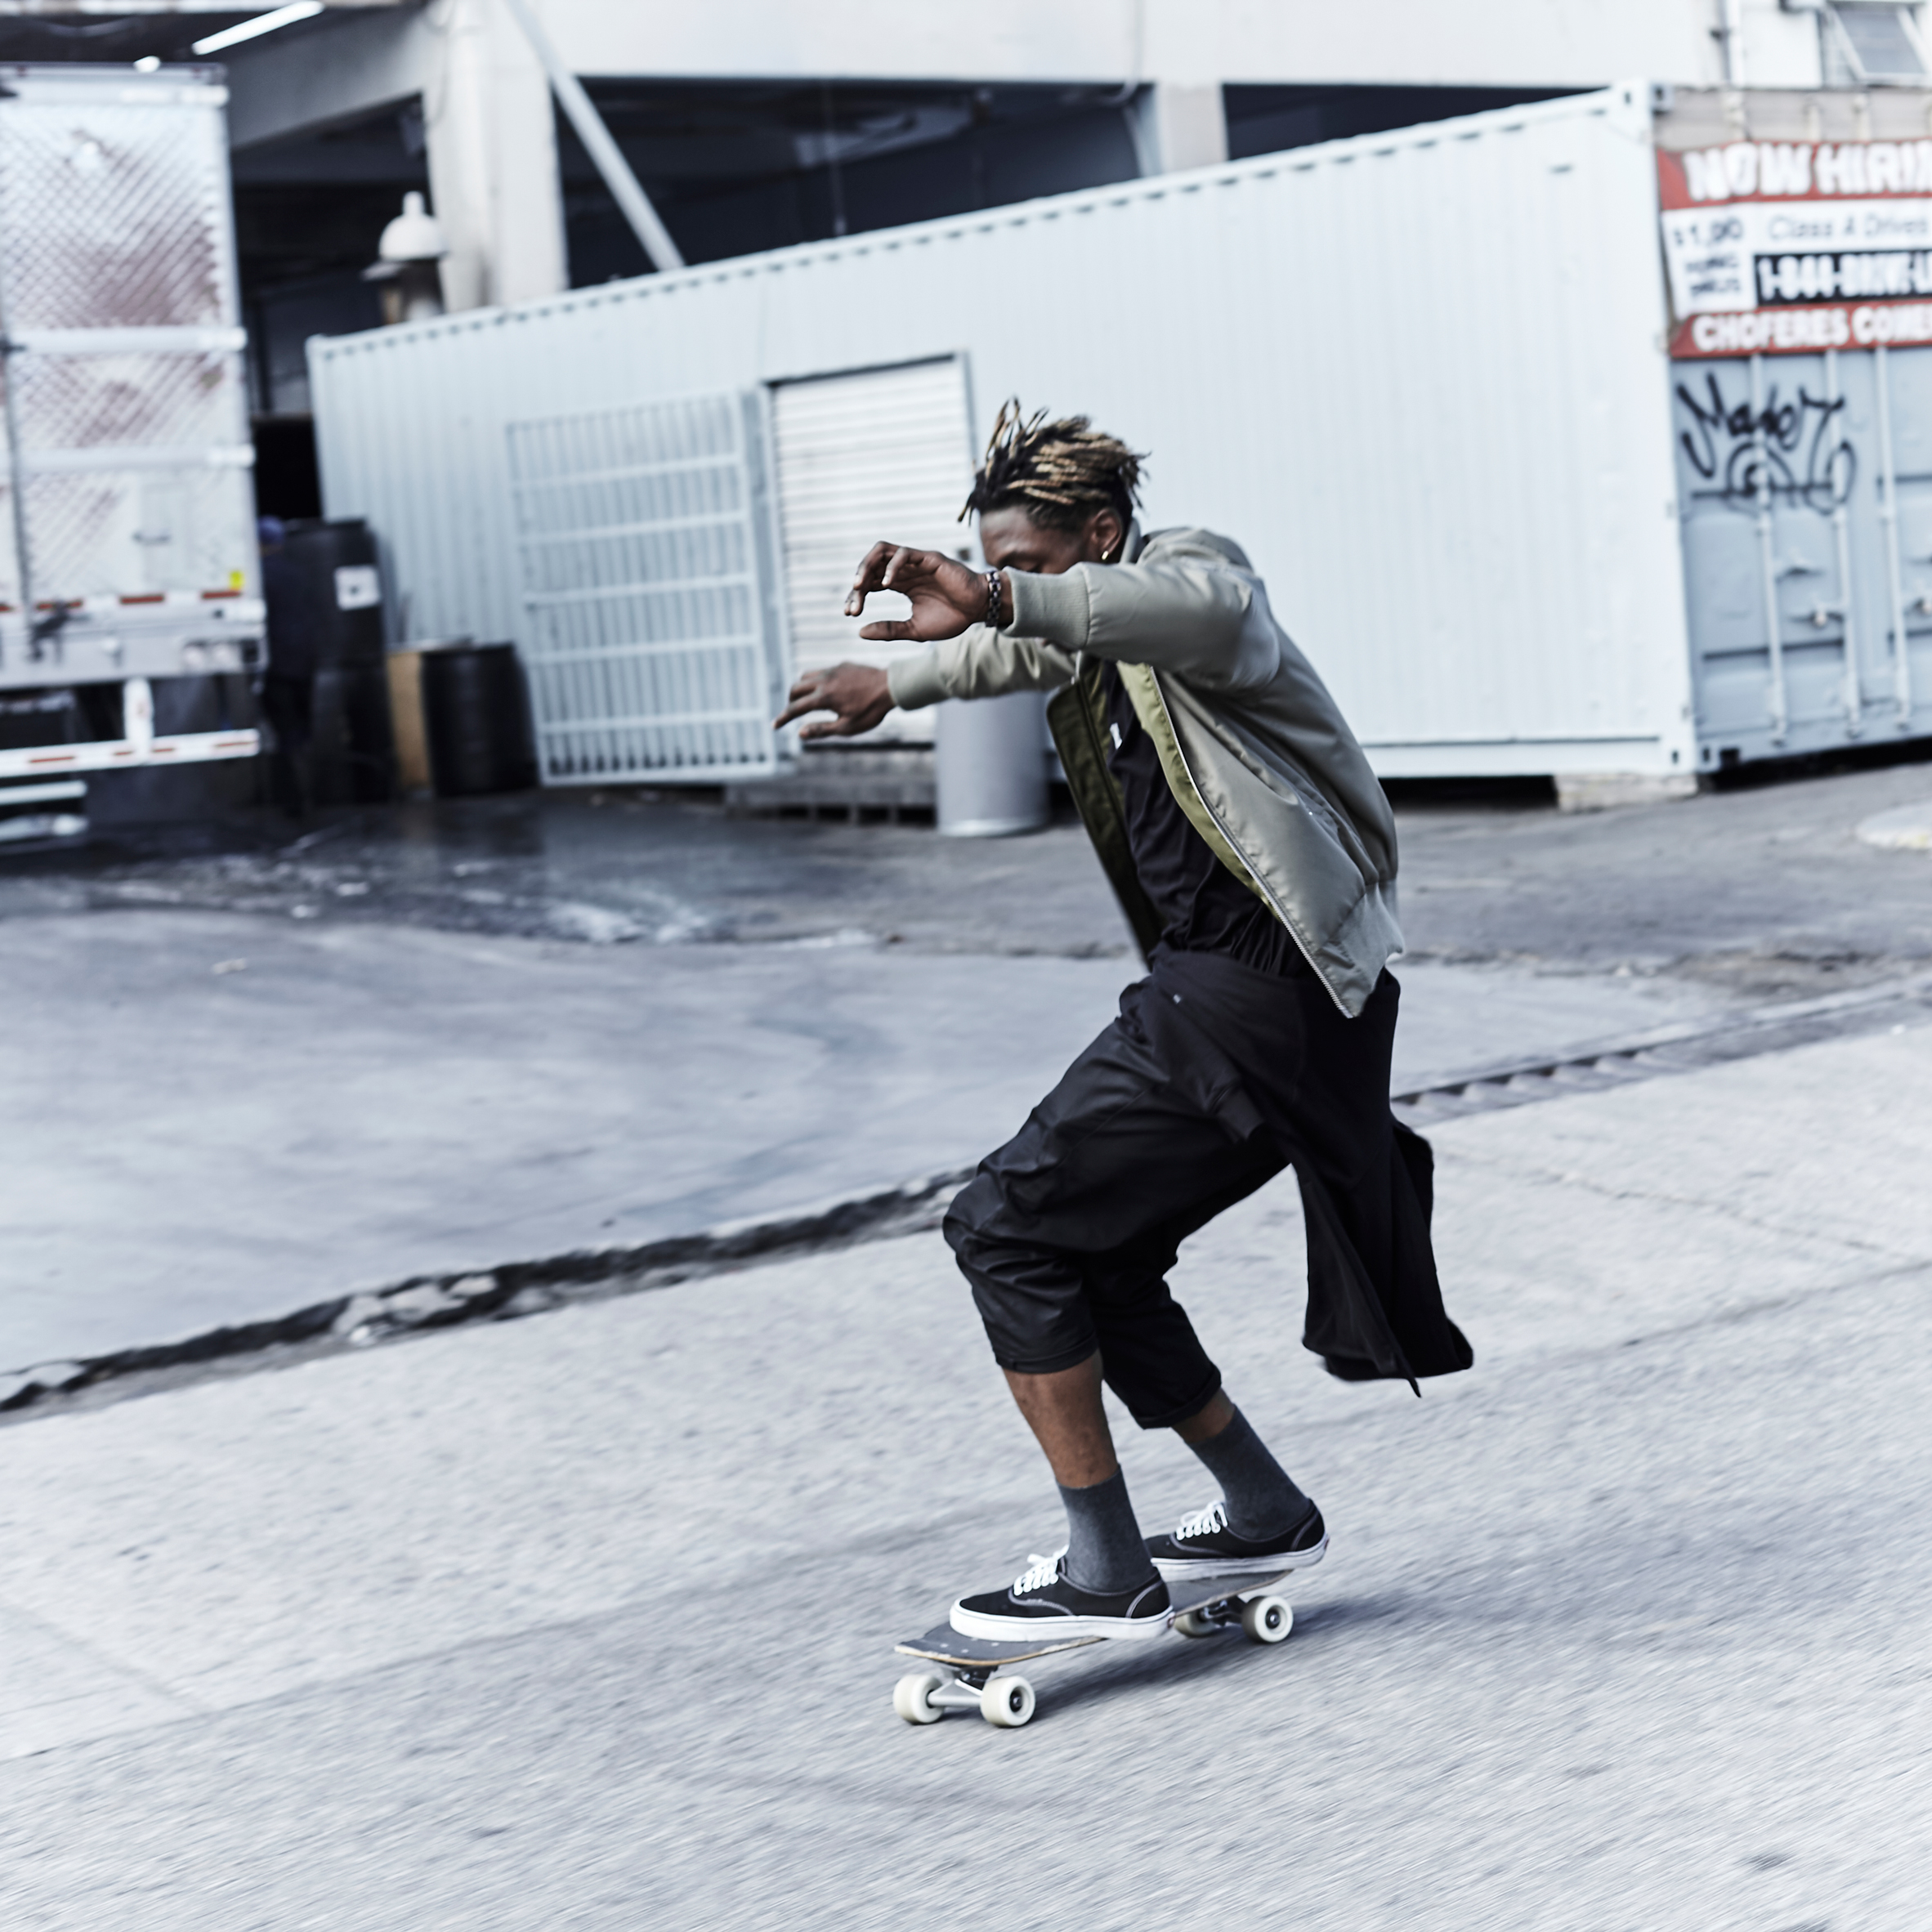 Le Cube' Skateboarding Installation Shortlisted by Dezeen